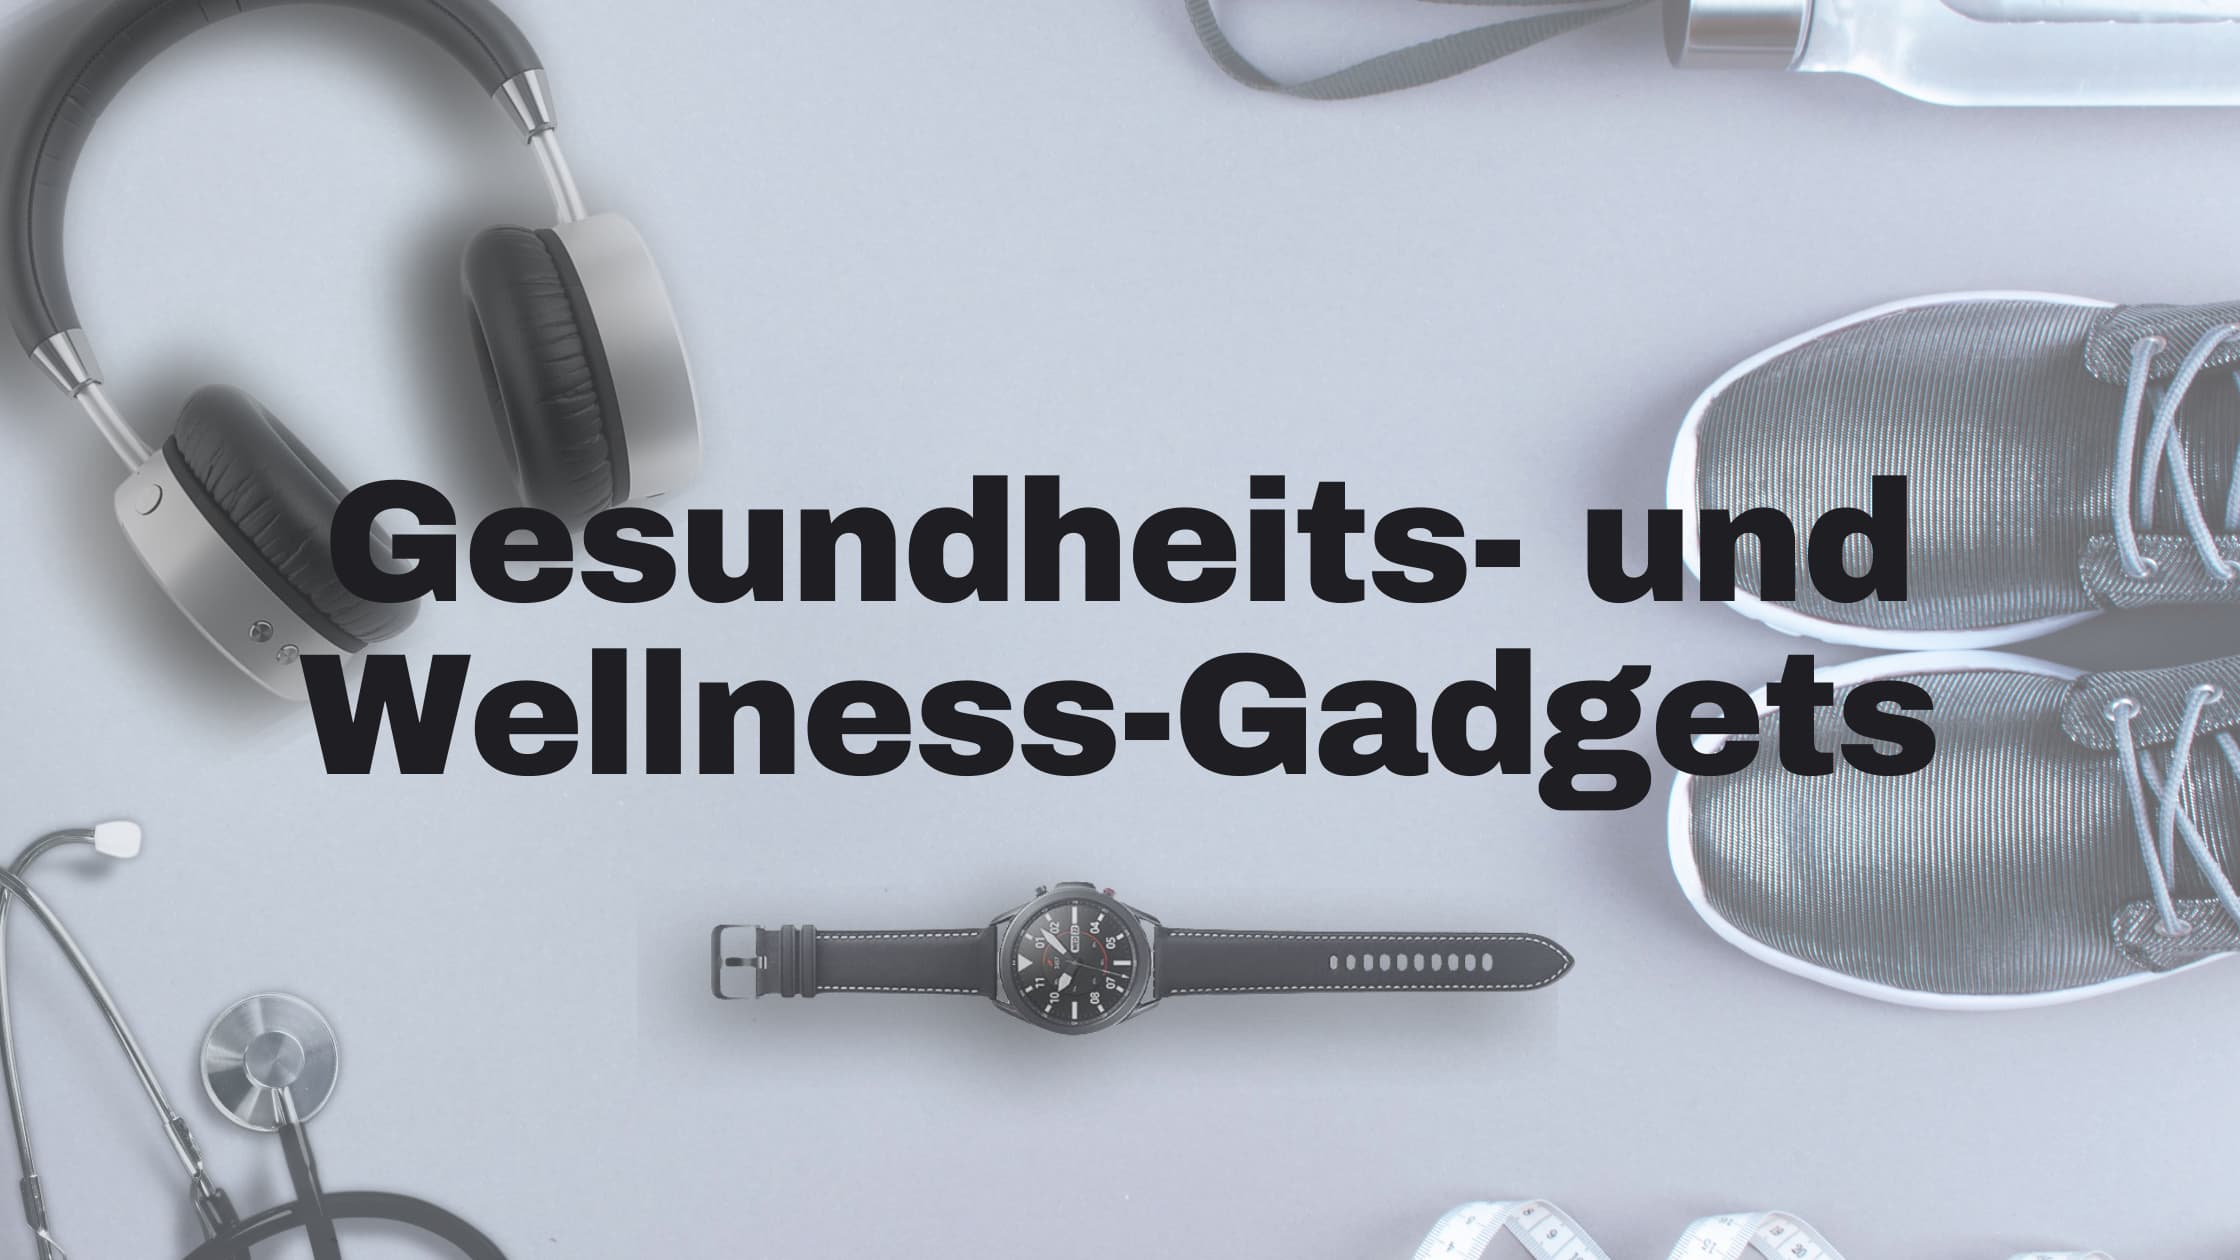 https://www.meintrendyhandy.de/blog/10/wp-content/uploads/2021/02/gesundheits-und-wellness-gadgets.jpg